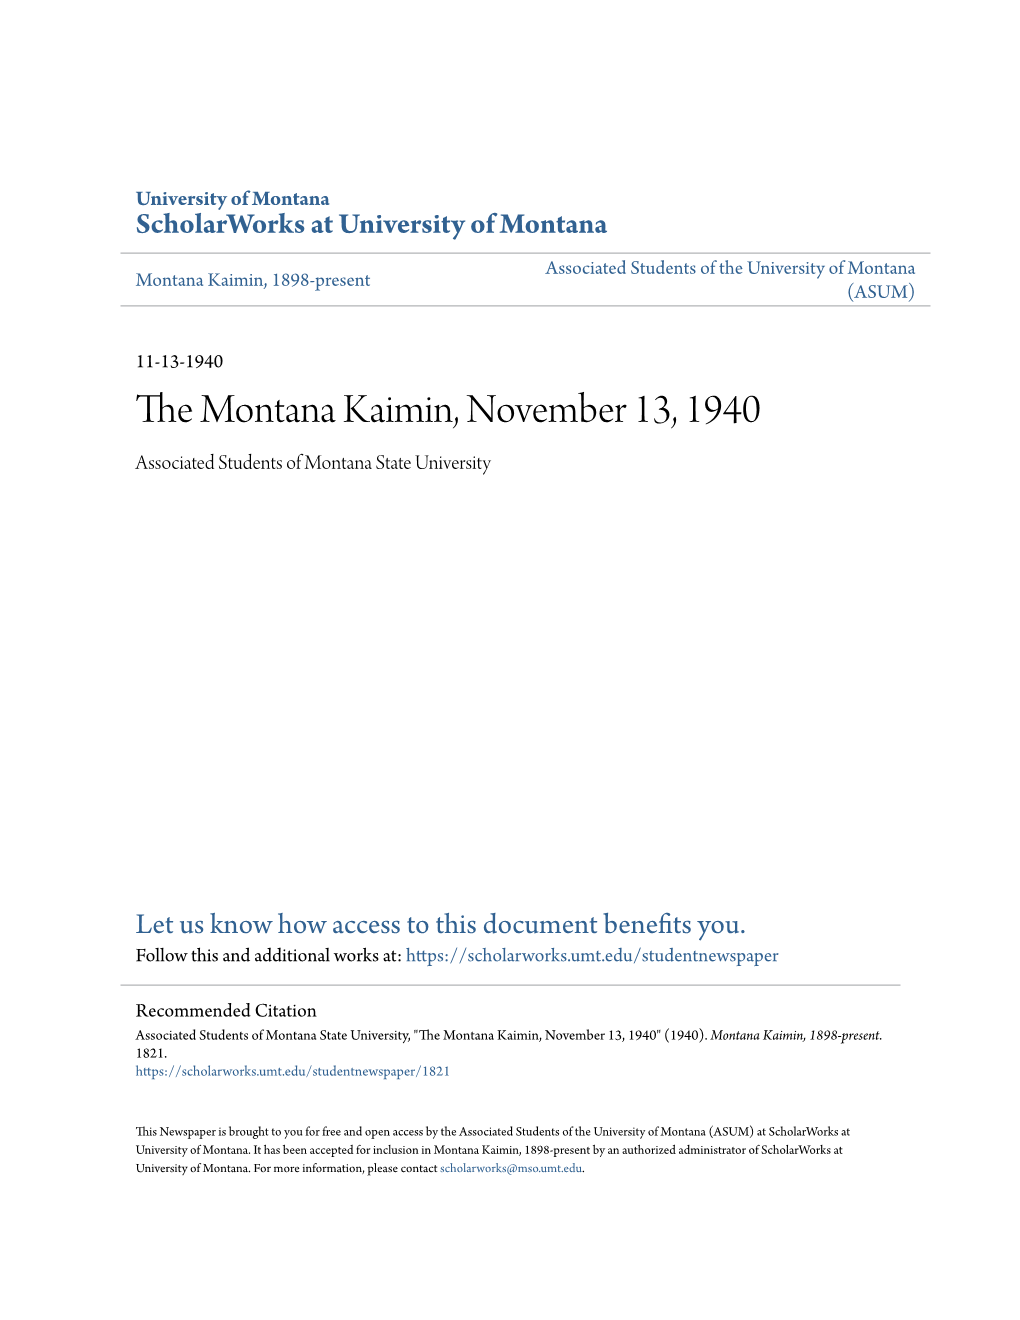 The Montana Kaimin, November 13, 1940